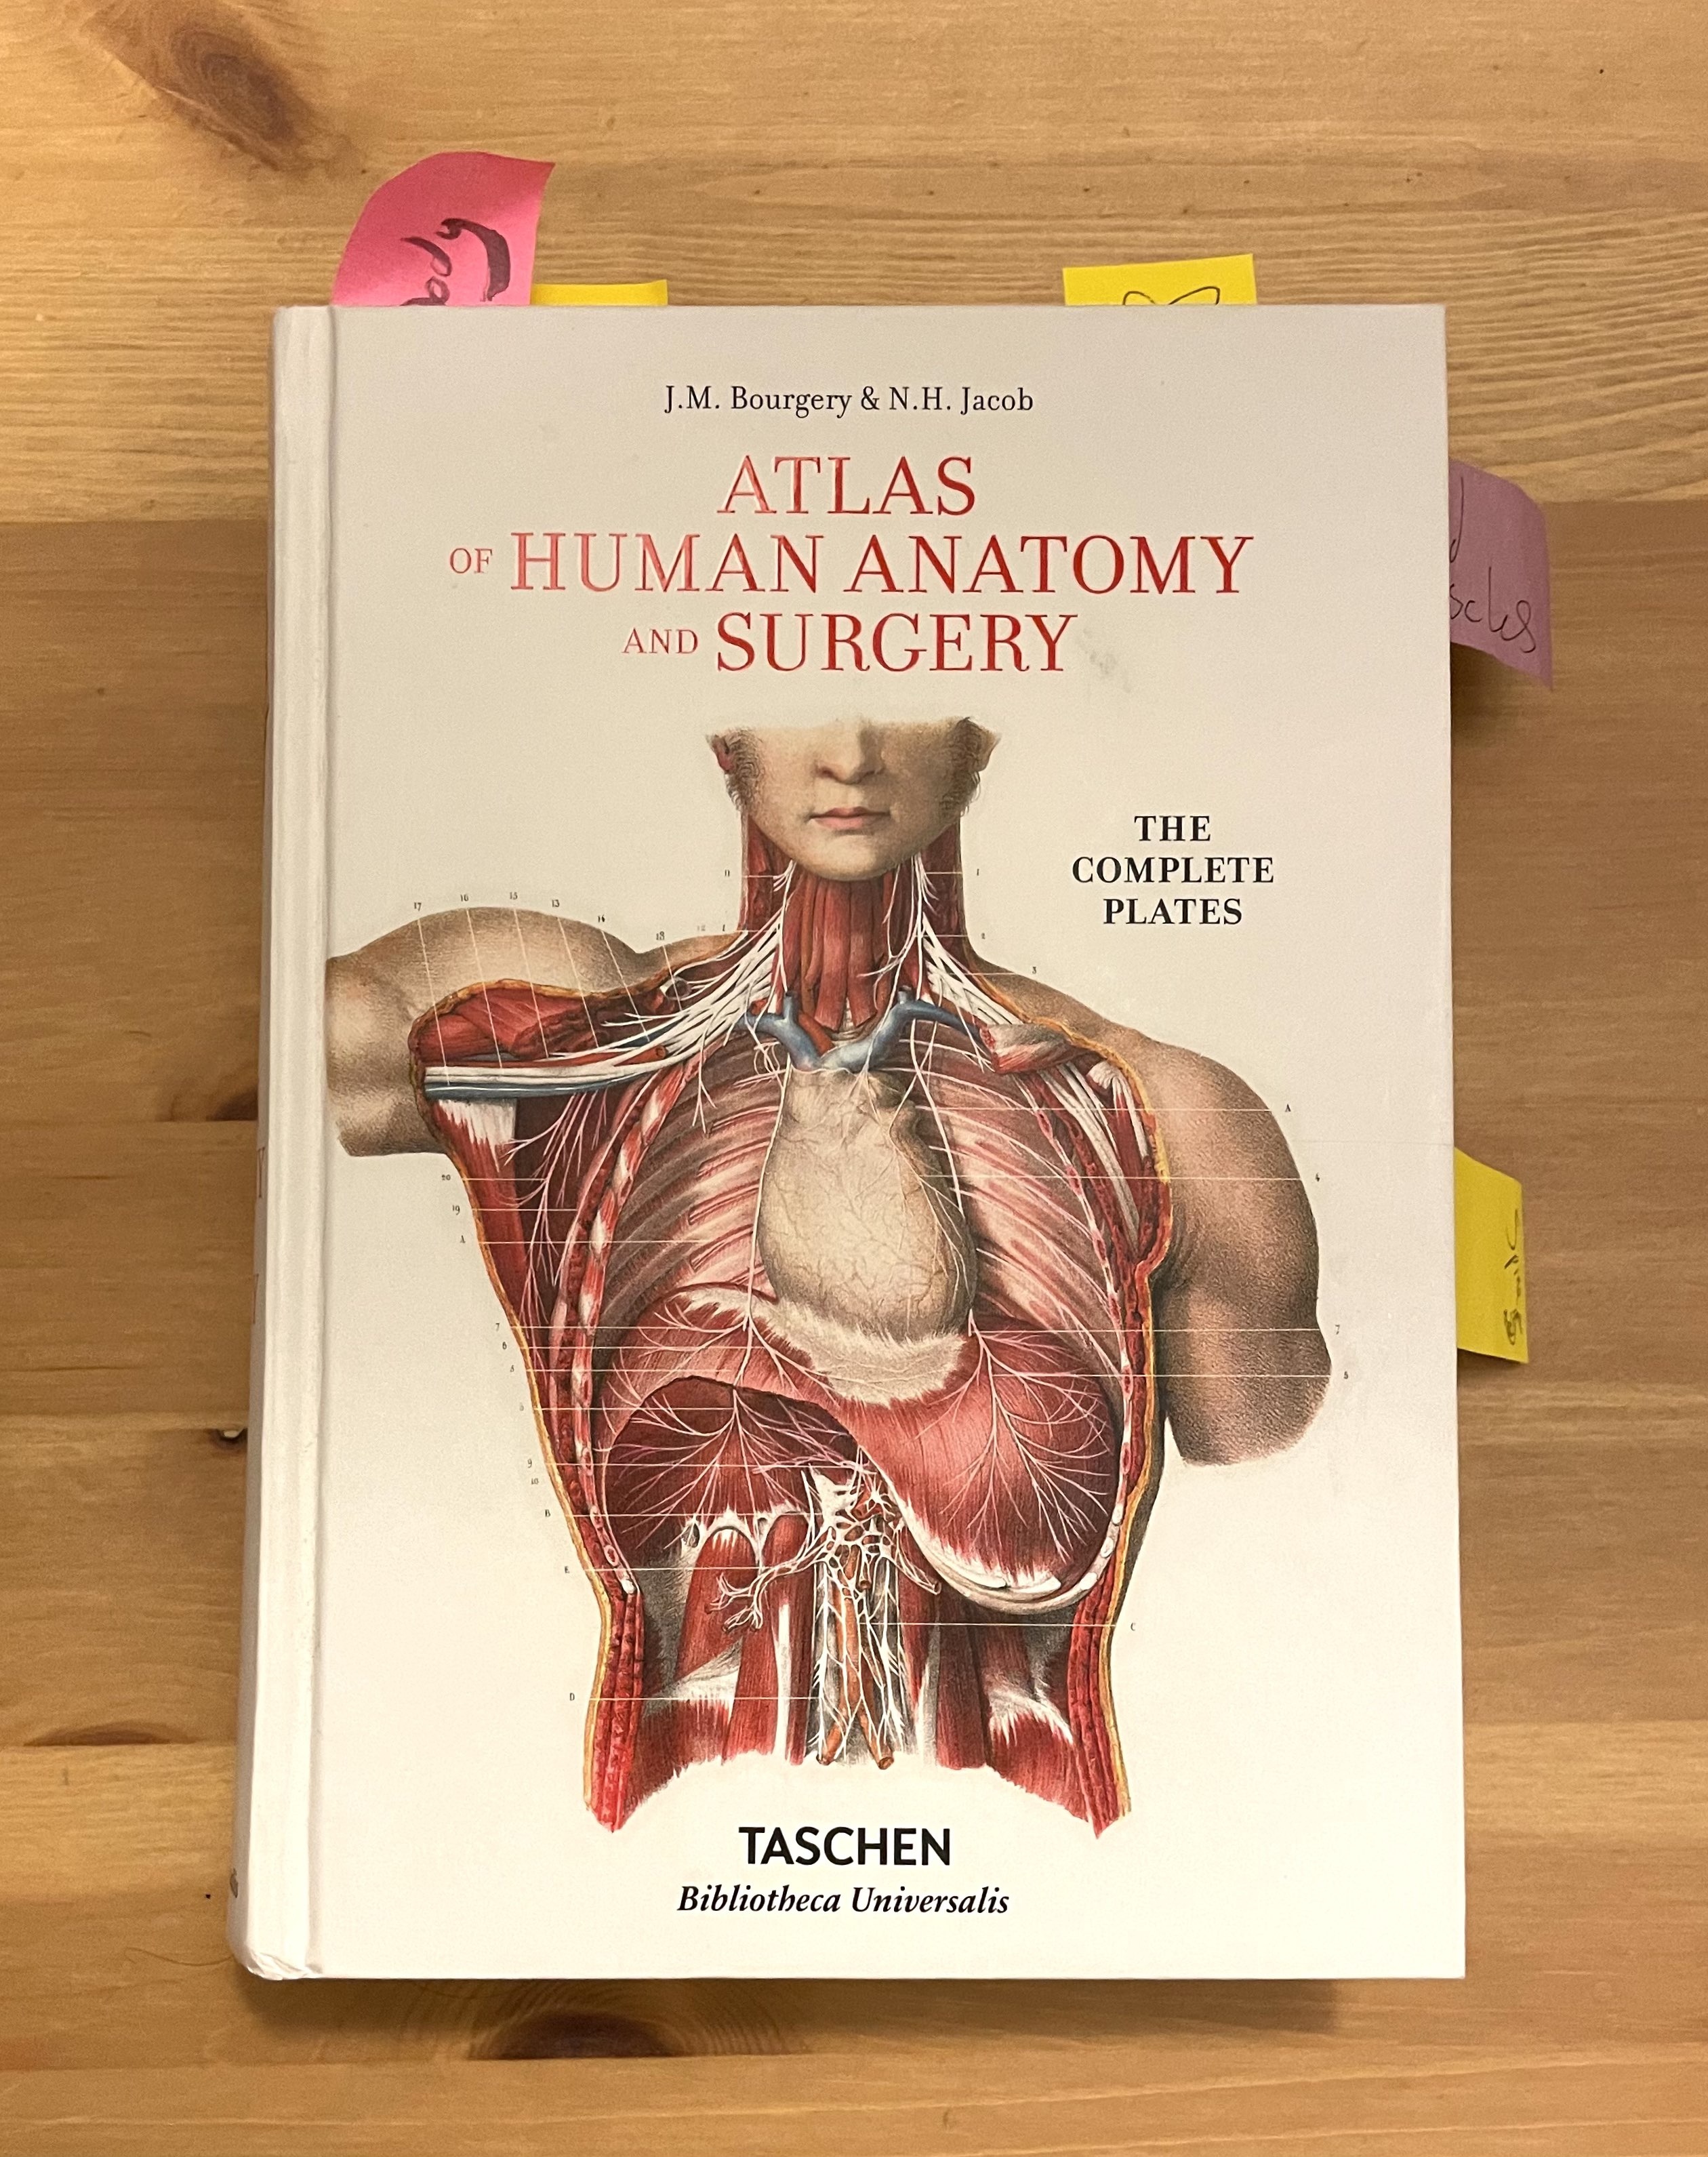 Atlas of Human Anatomy and Surgery - J.M. Bourgery & N.H. Jacob